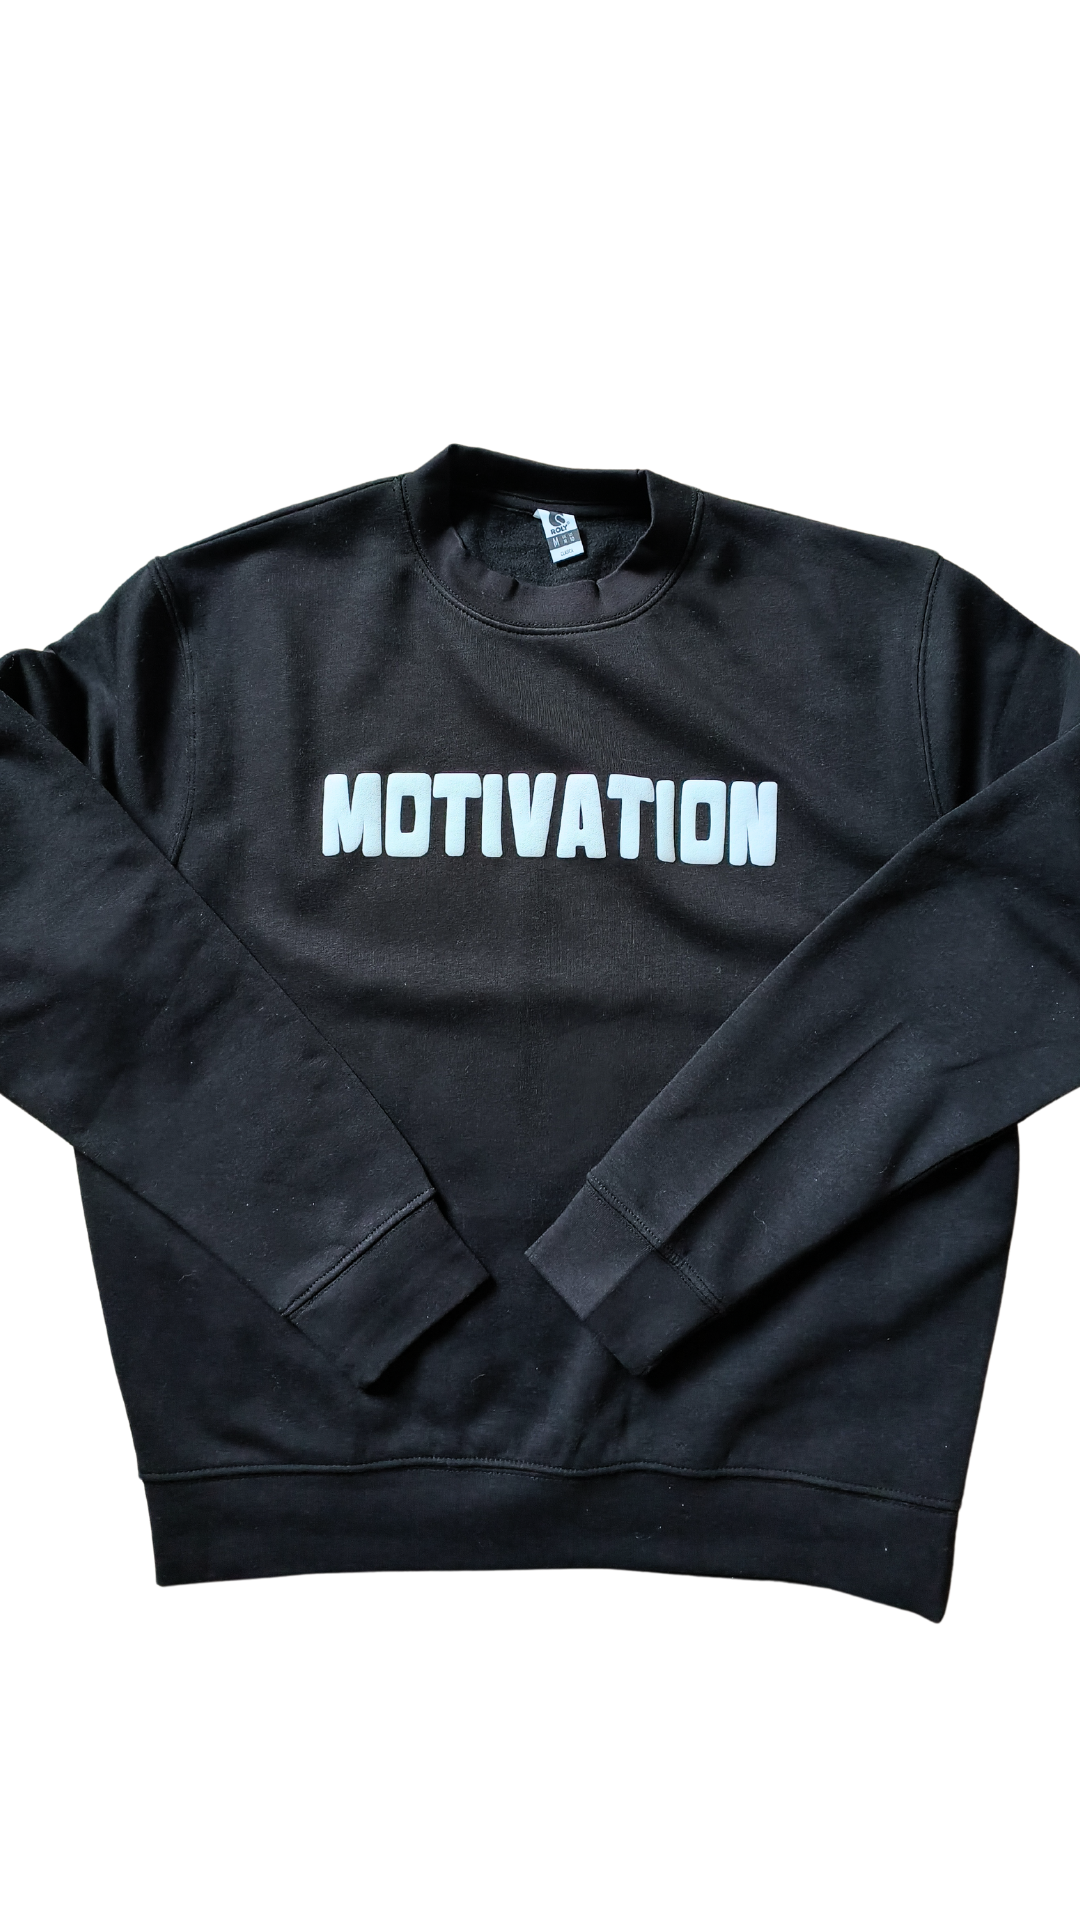 Motivation sweater black M